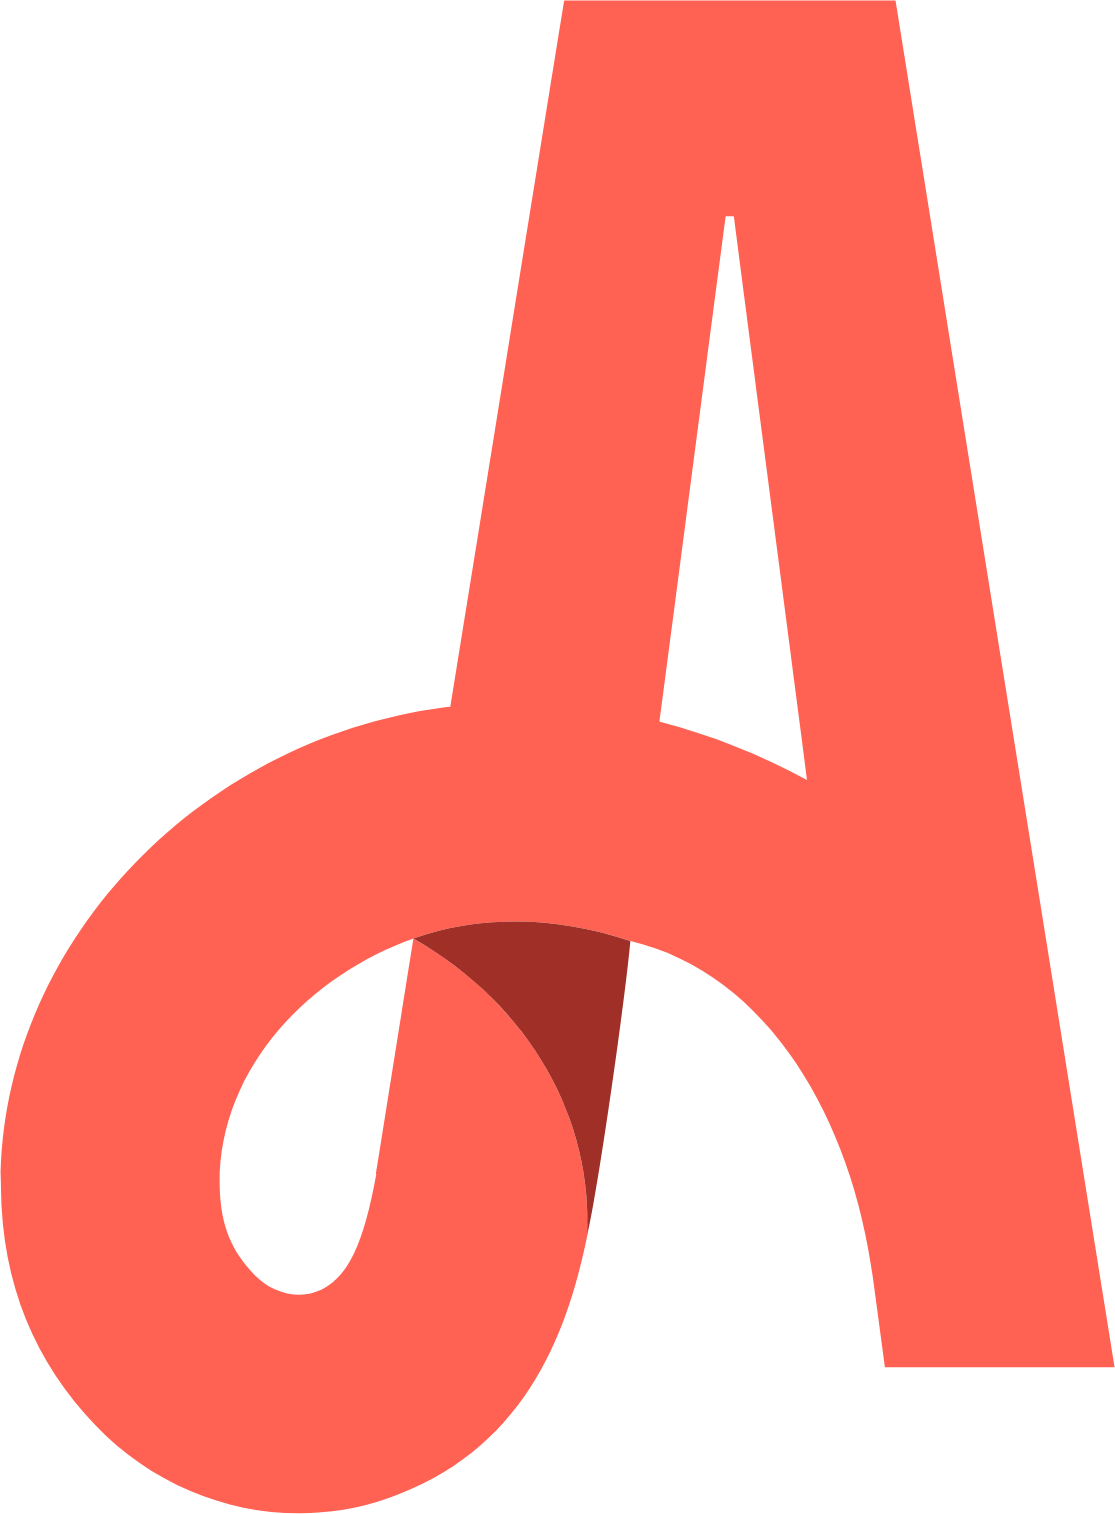 ANGI Homeservices logo (PNG transparent)